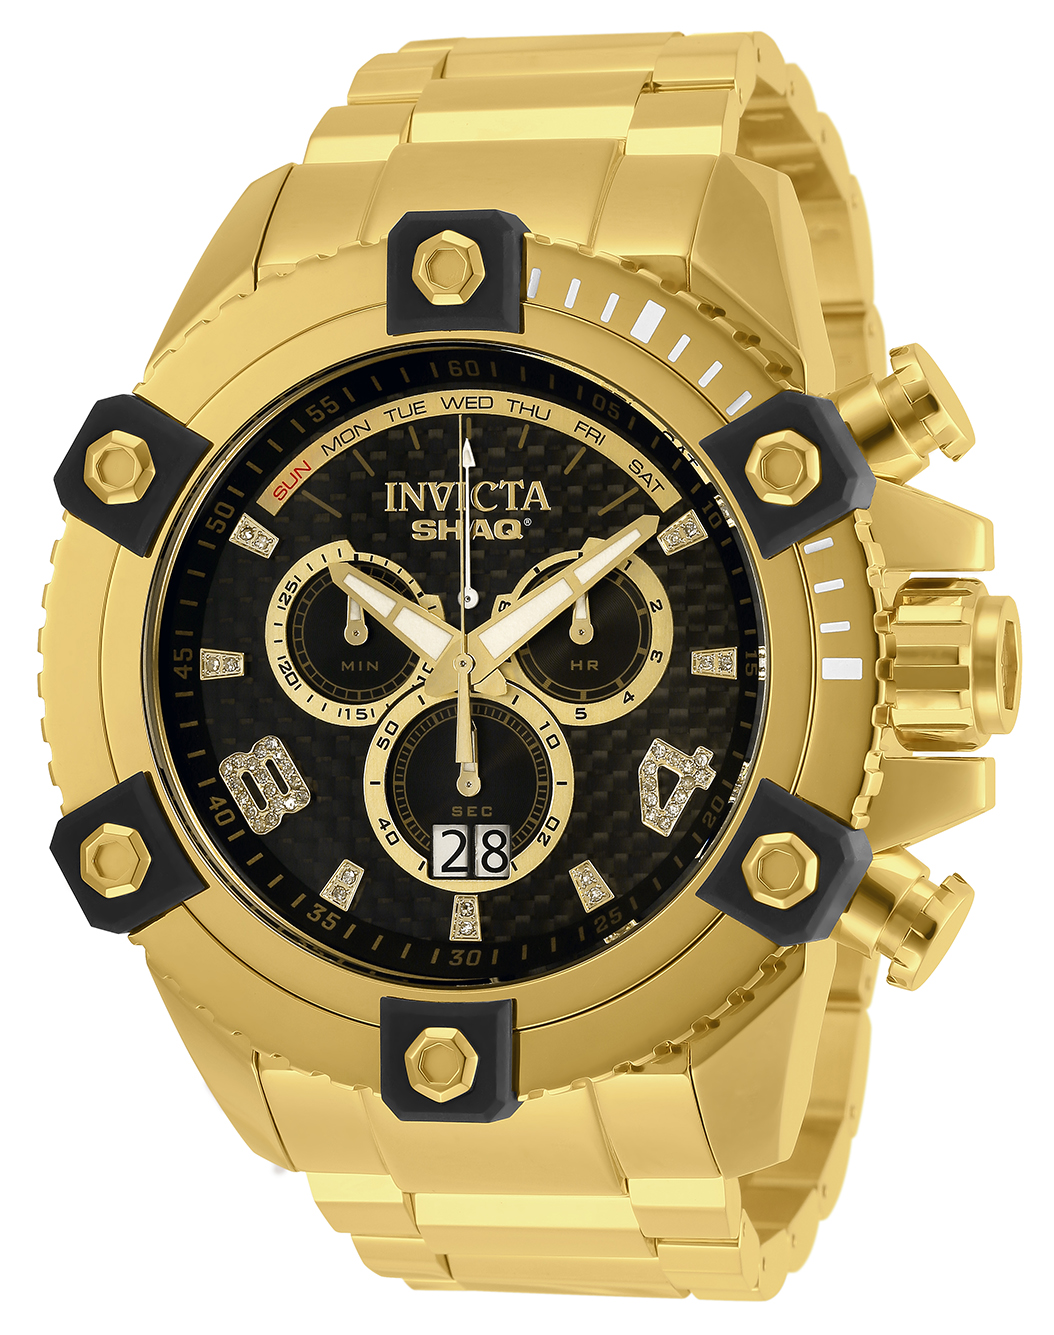 Invicta SHAQ 0.19 Carat Diamond Men's Watch - 60mm, Gold (33726)